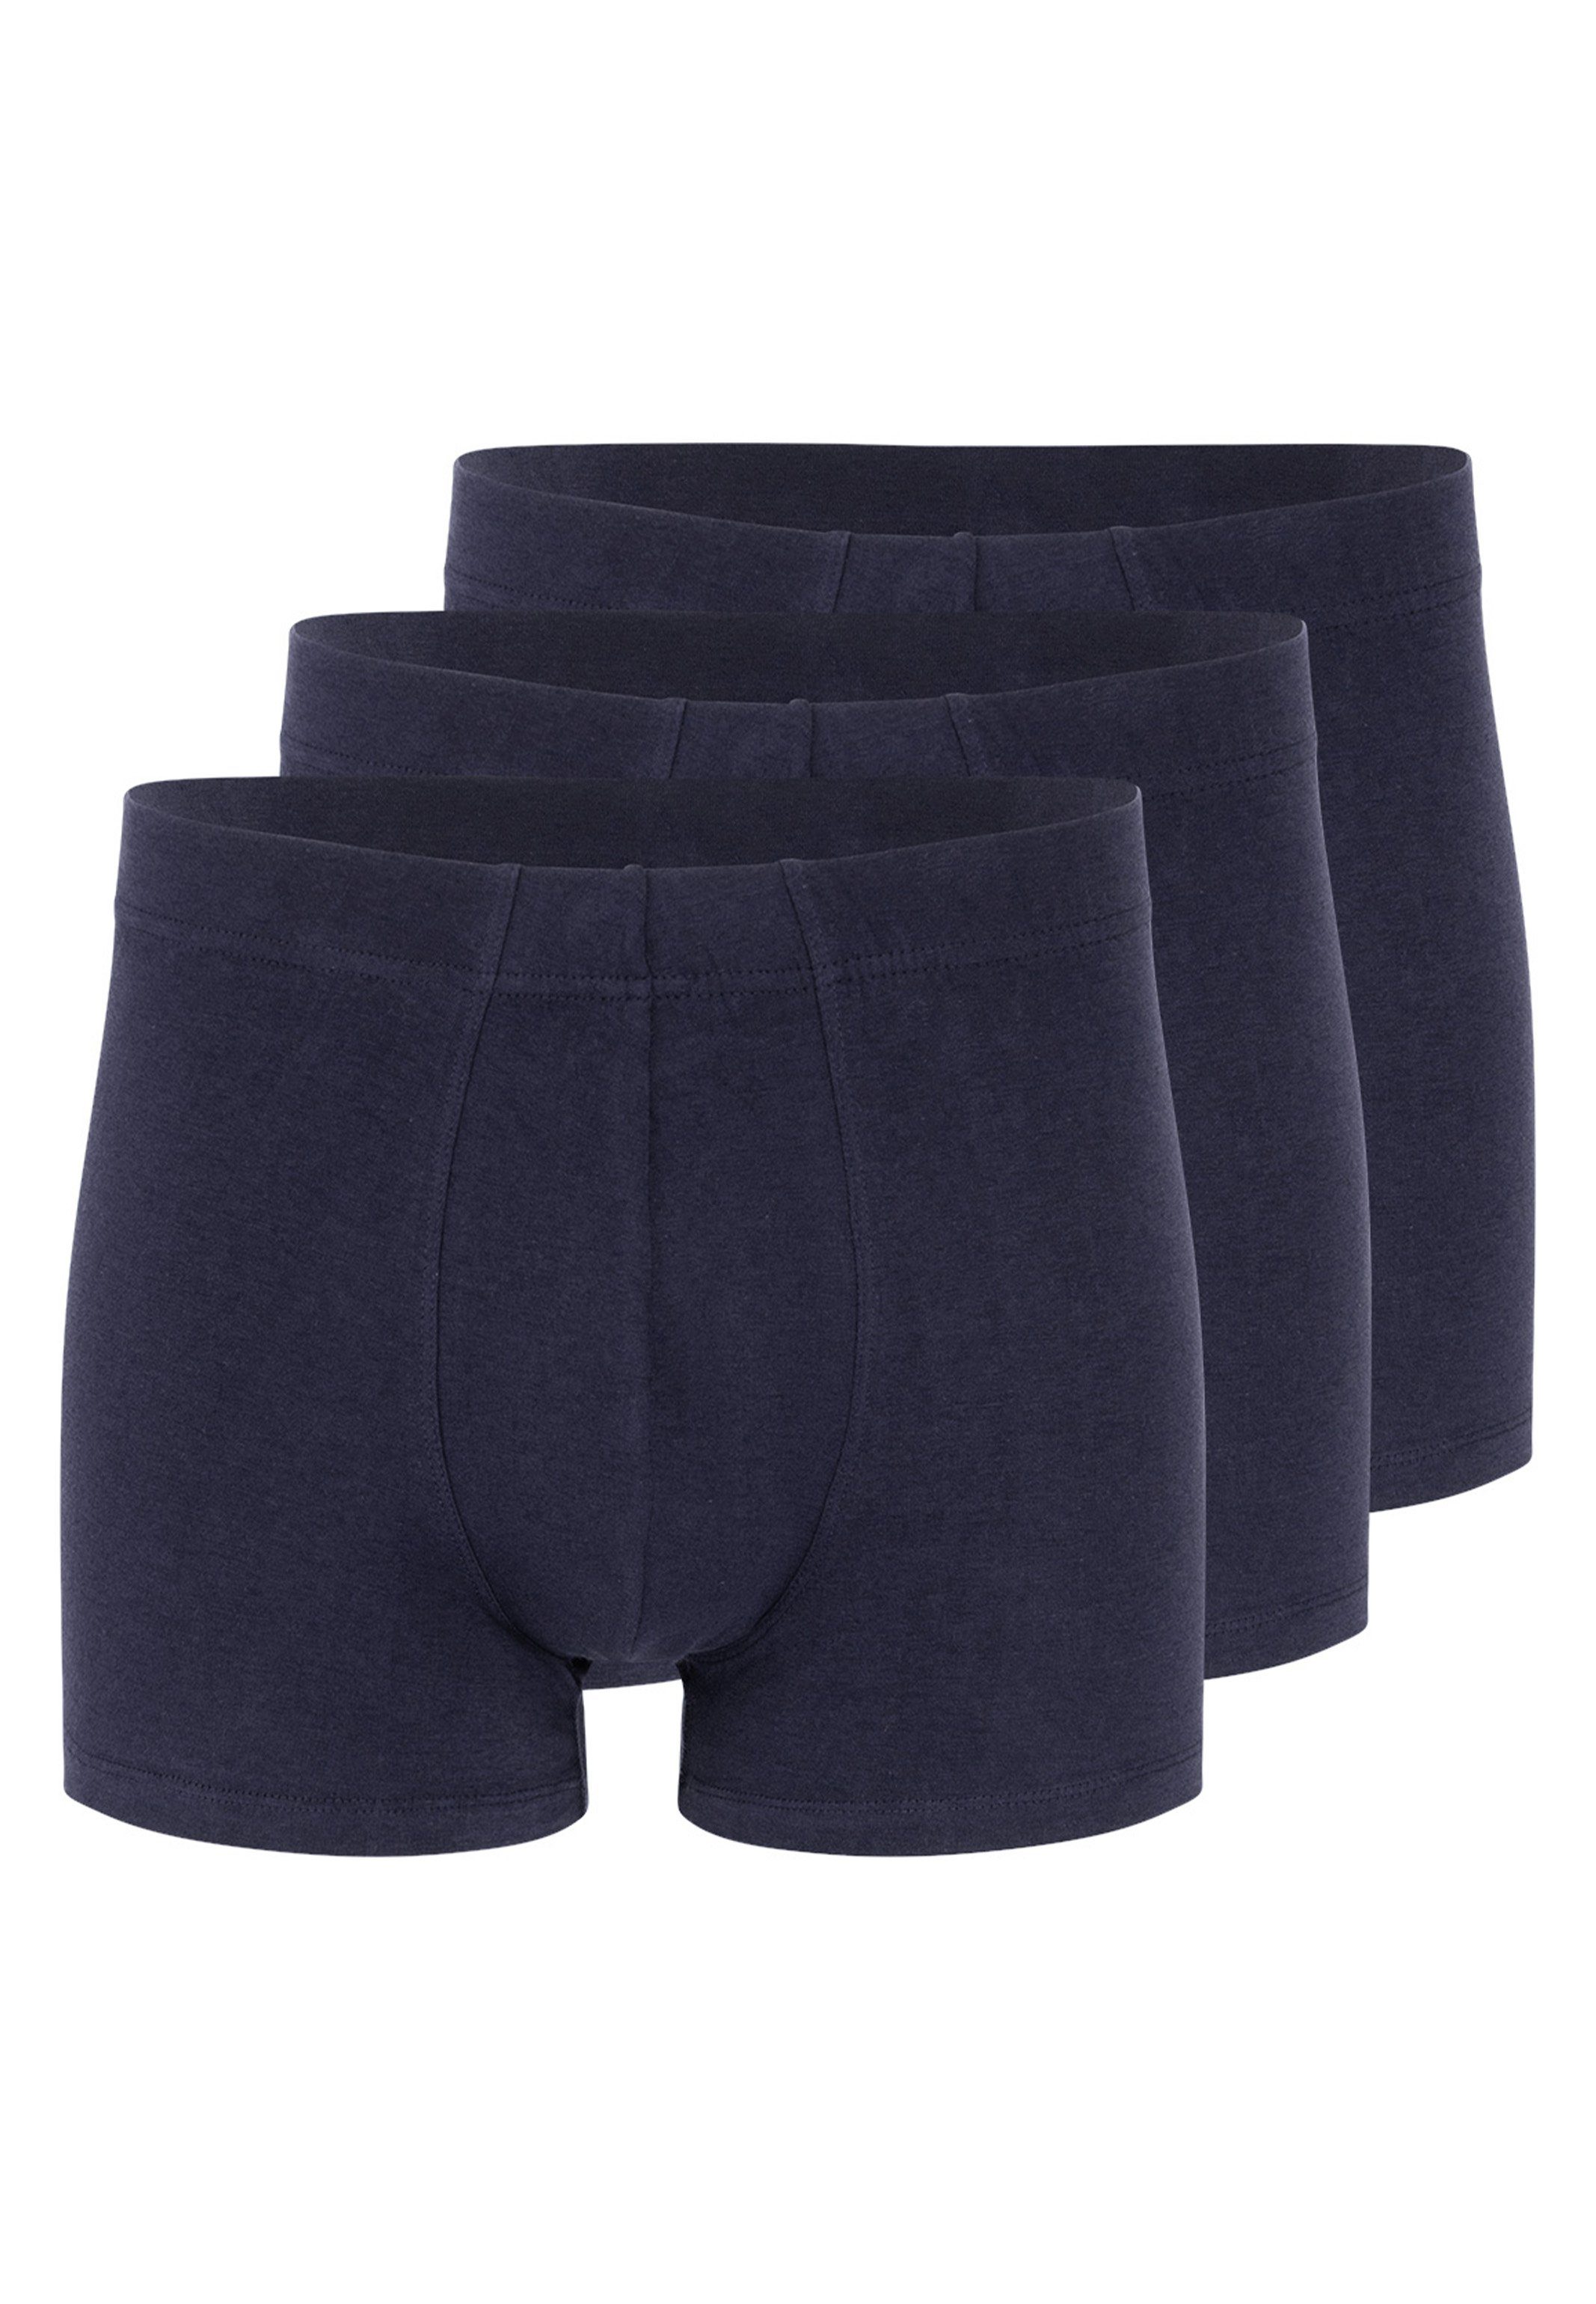 Almonu Retro Boxer 3er Pack Organic Cotton (Spar-Set, 3-St) Retro Short / Pant - Baumwolle - Ohne Eingriff - Atmungsaktiv Navy